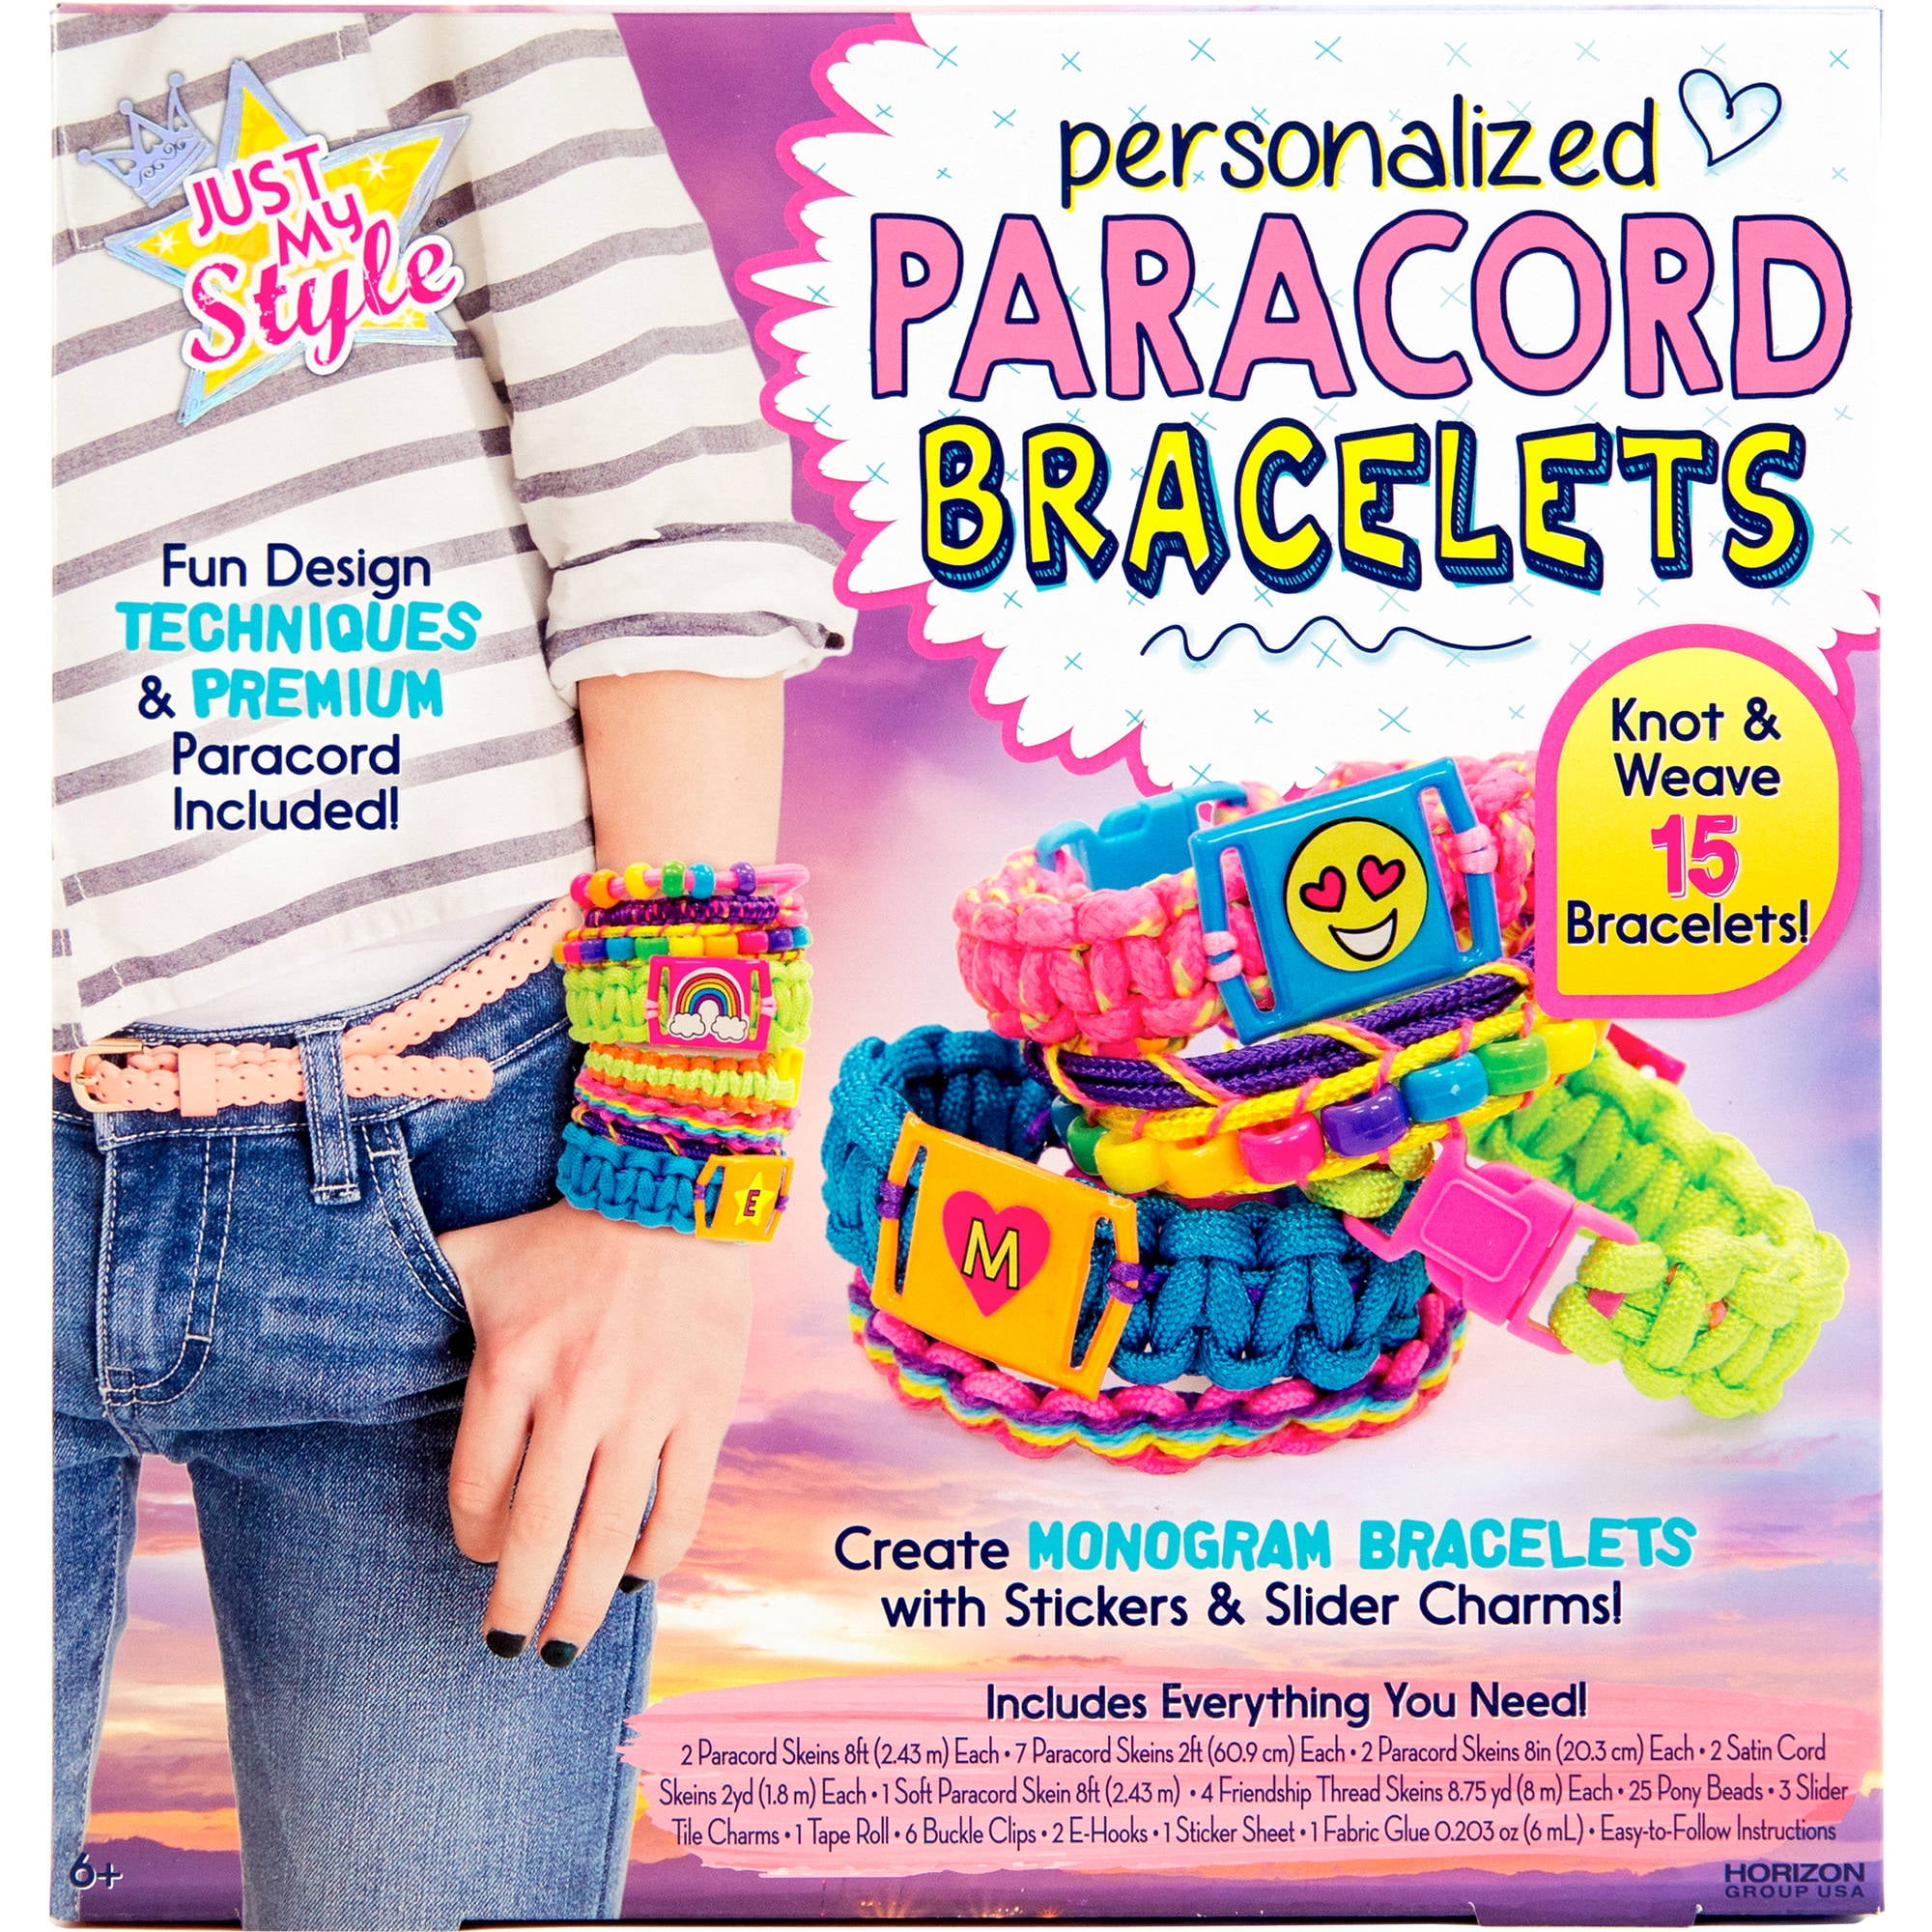 25 Easy Paracord Bracelet Patterns: Make Your Bracelets